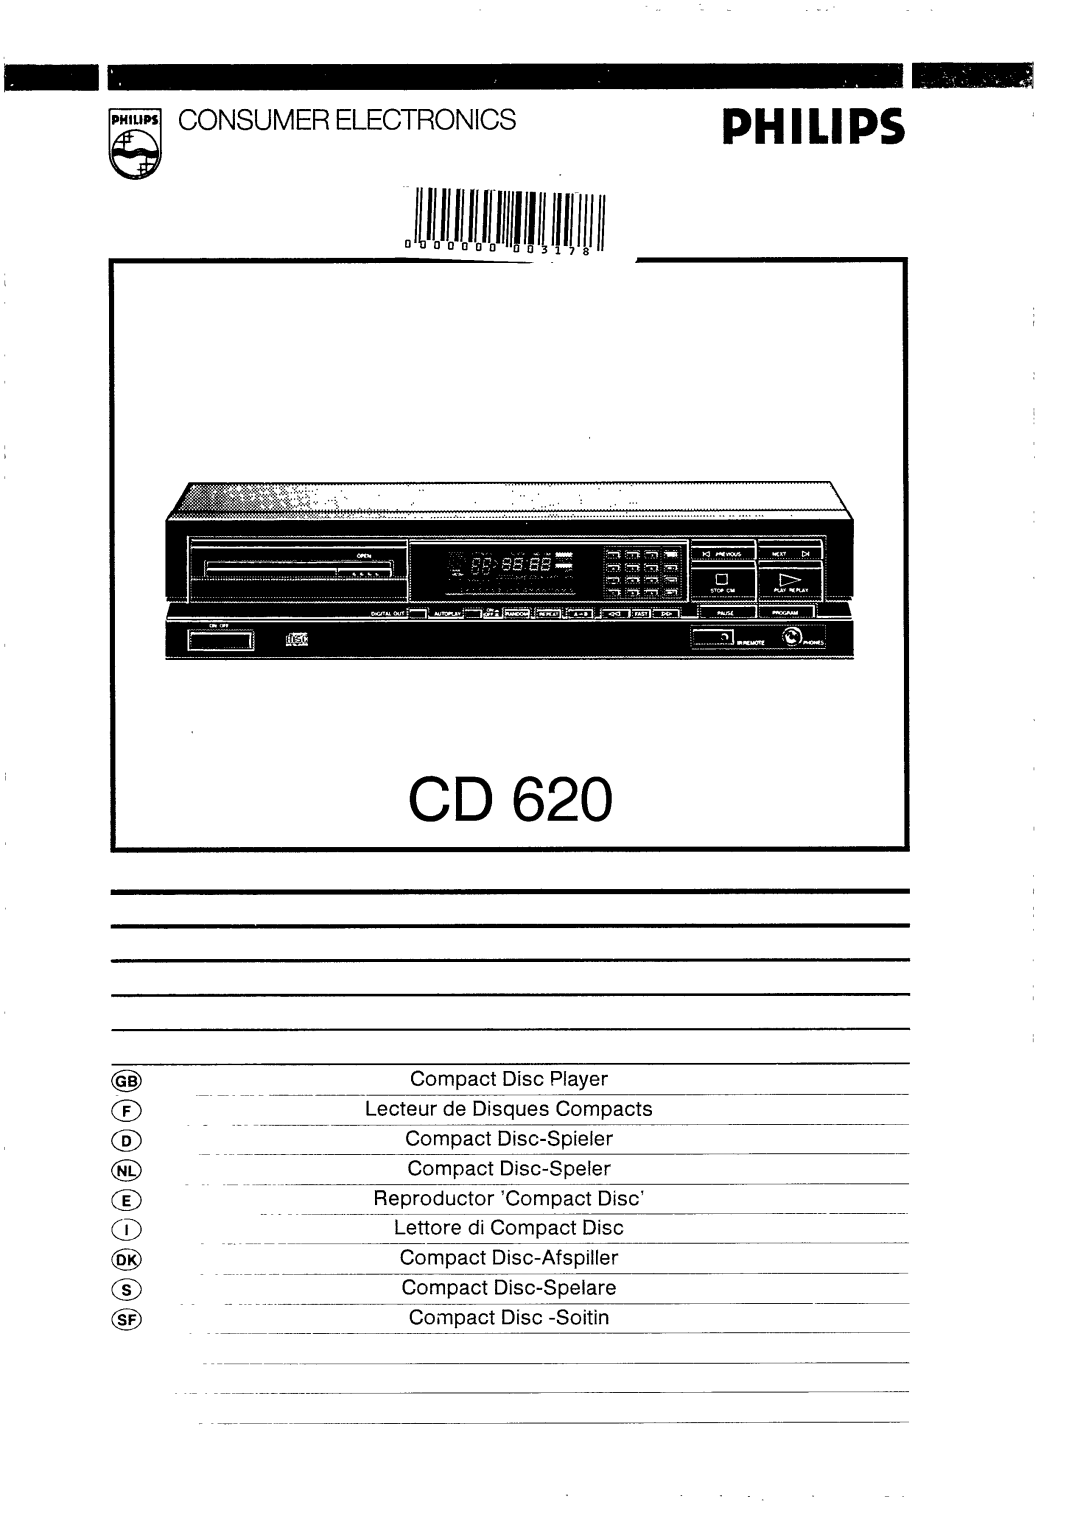 Philips CD 620 manual 